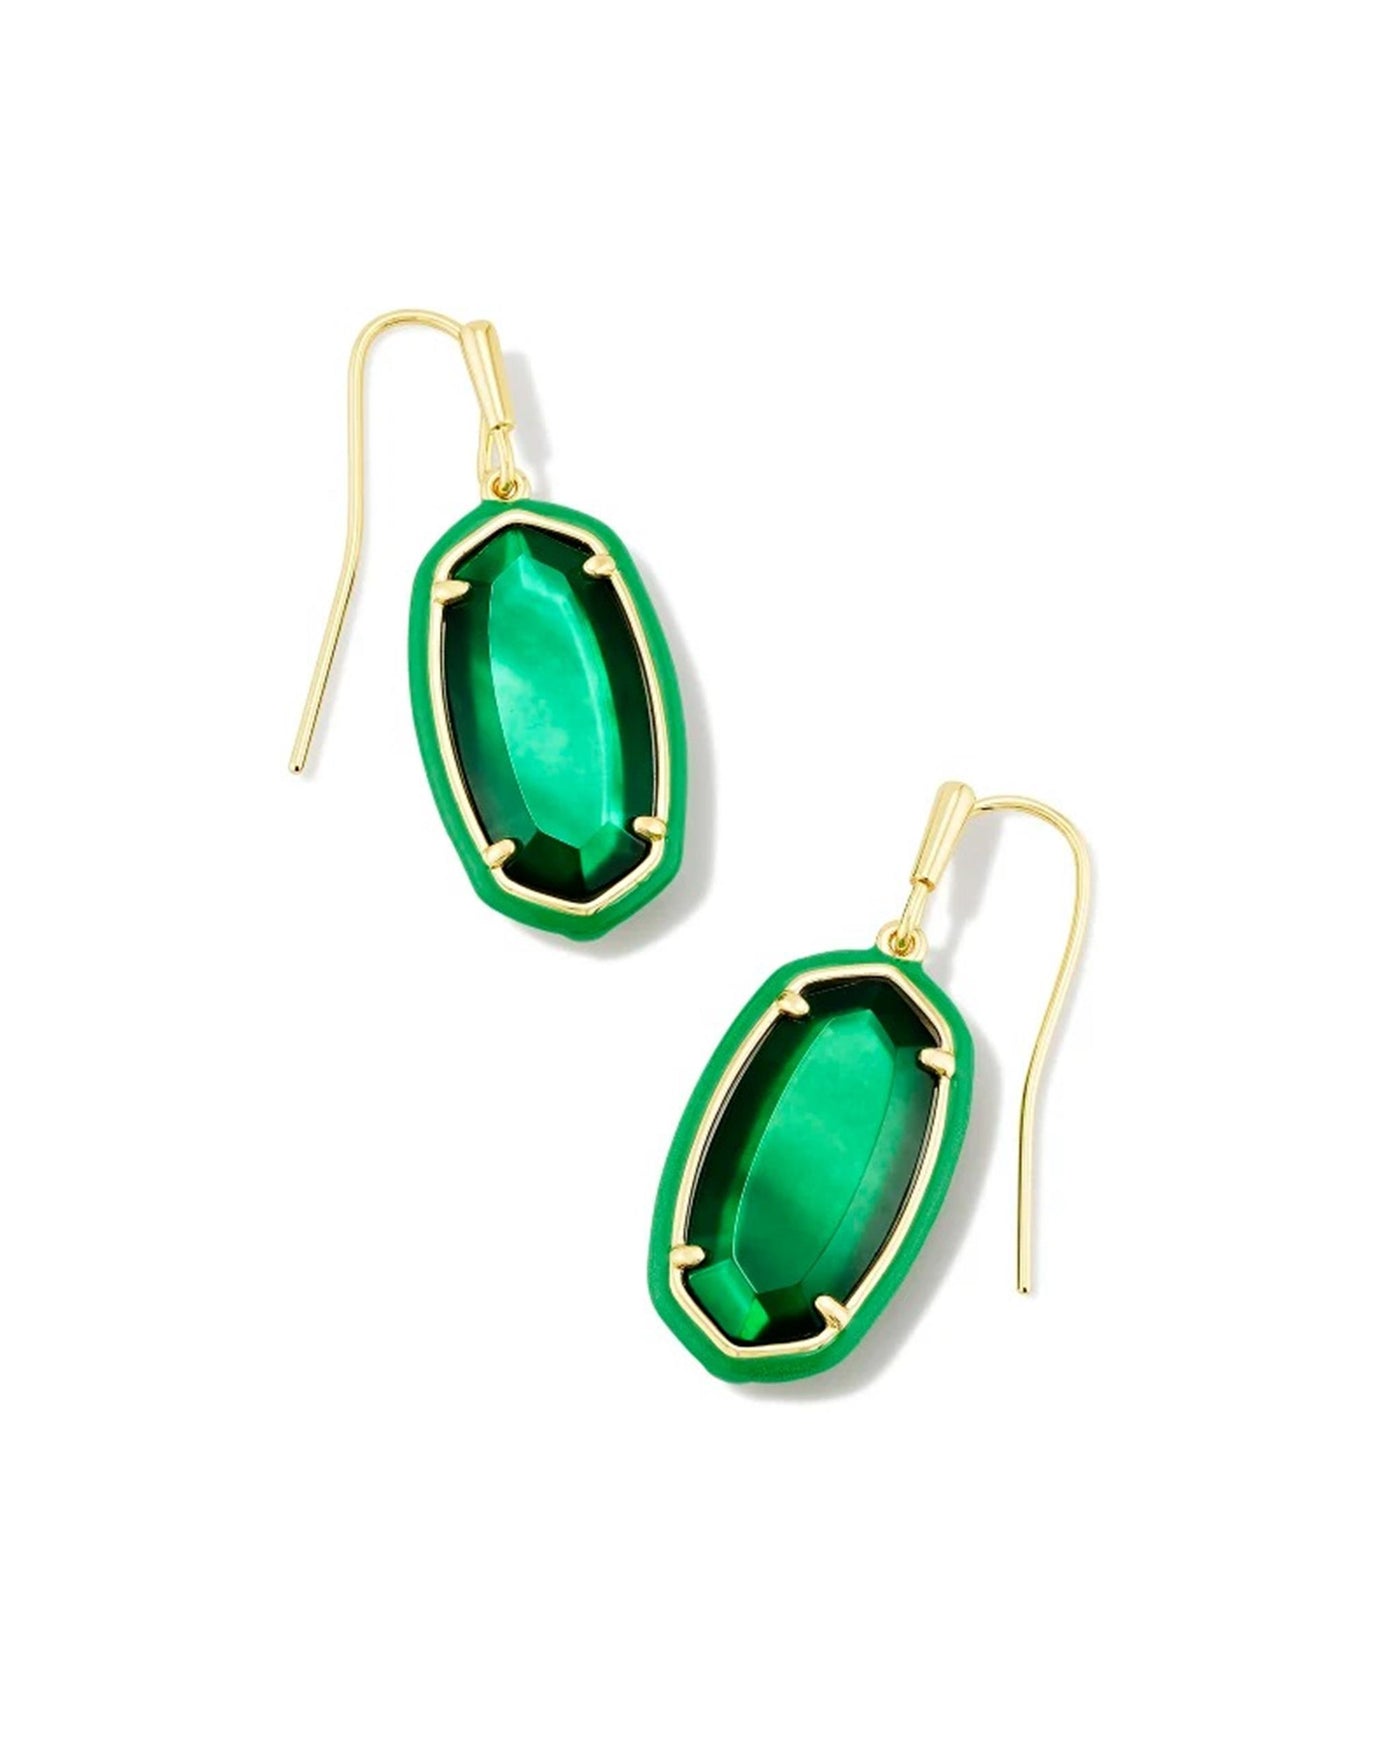 Gold Tone Earrings Featuring Green Emerald by Kendra Scott